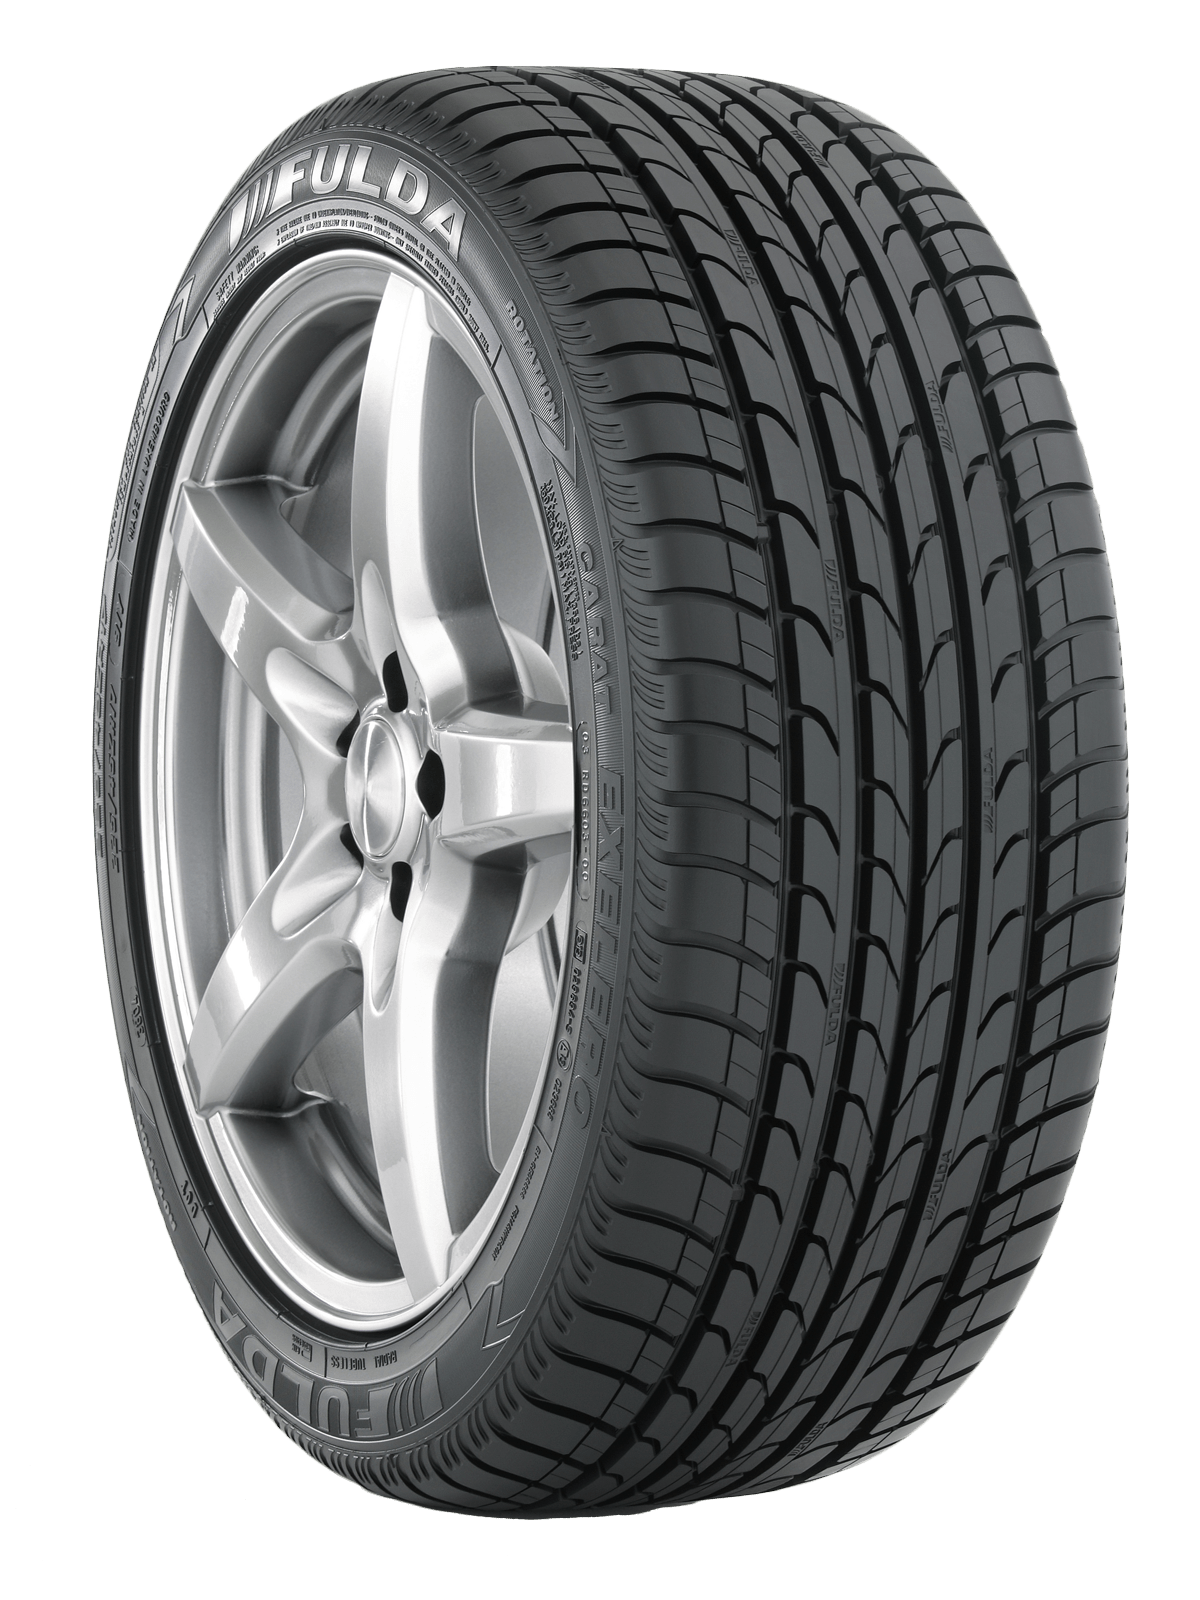 Fulda Tyre SVG Clip arts